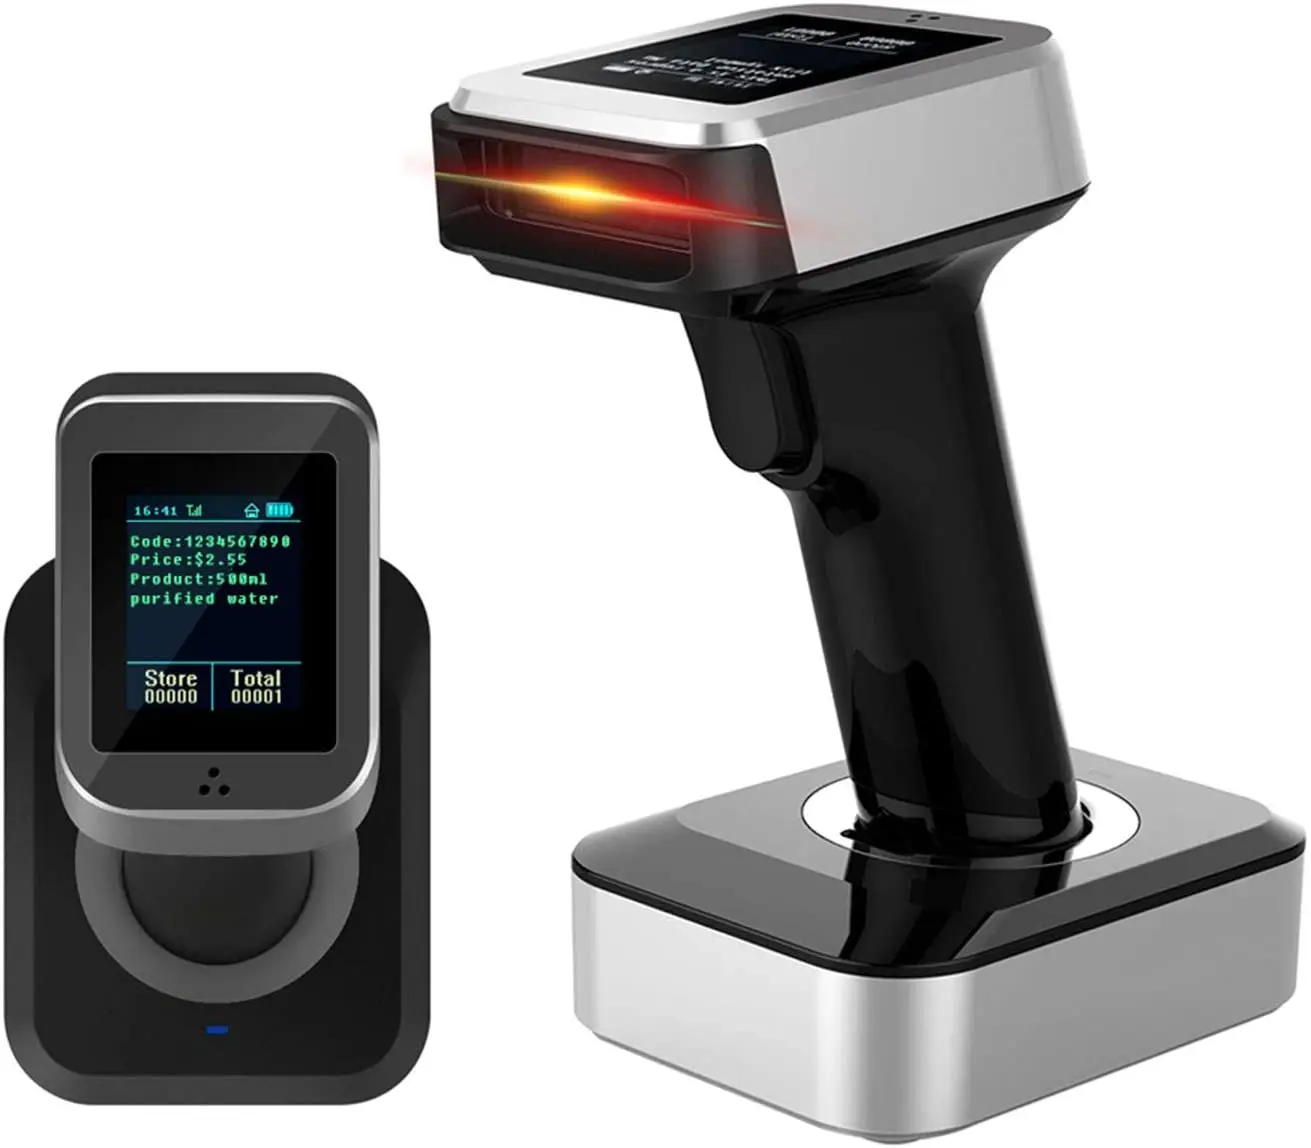 2D Barcode Scanner,alacrity Wireless USB Portable Bar Code Scanner with Vibration Alert 32-bit Processor